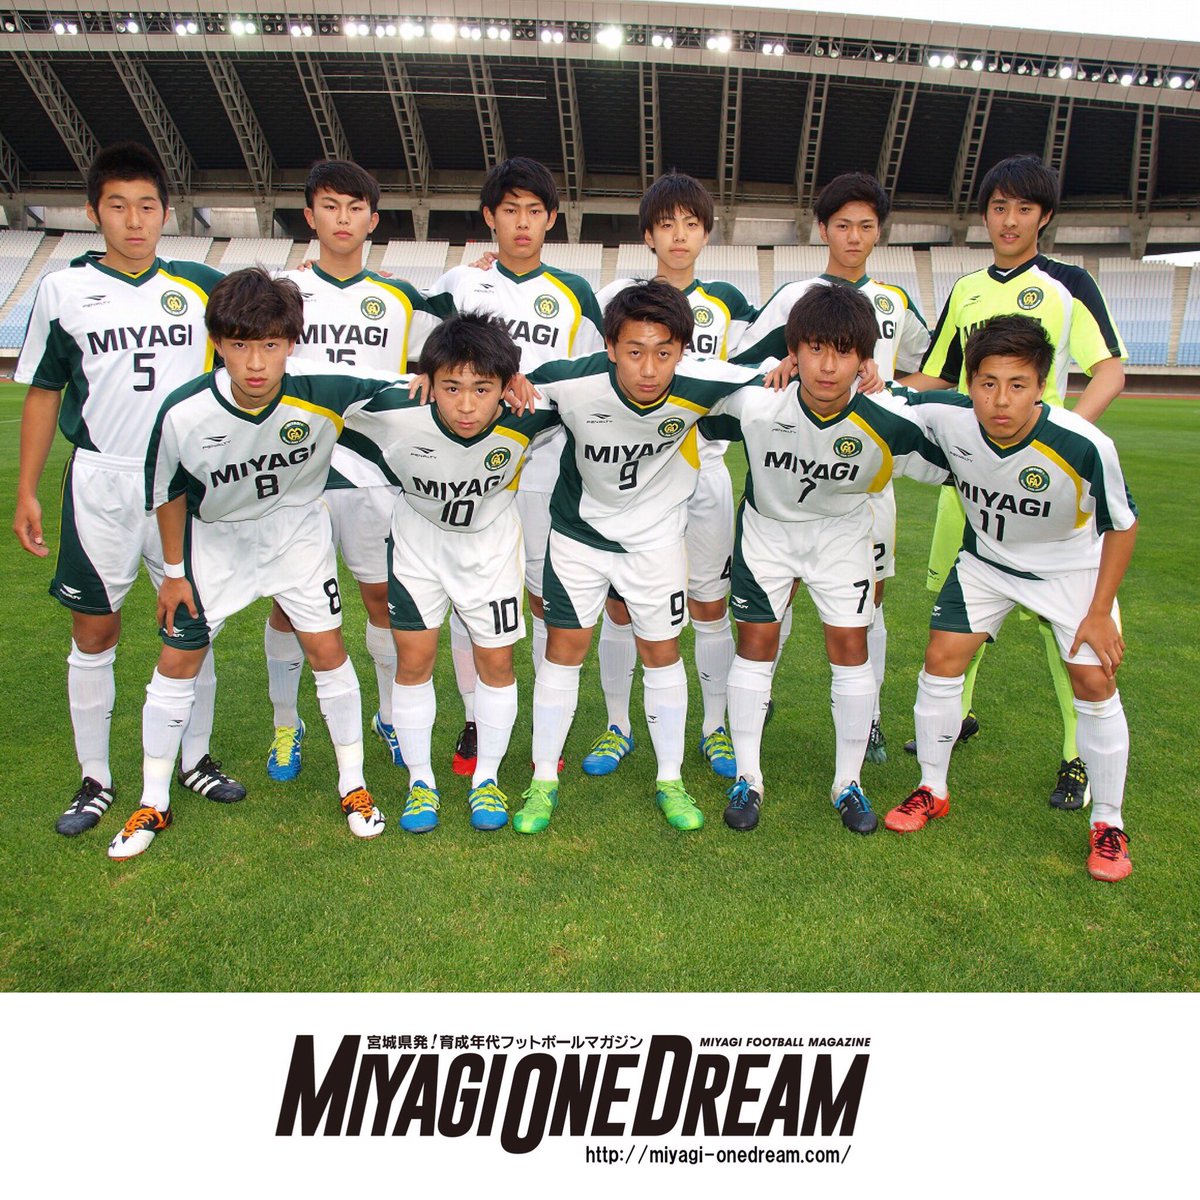 Miyagi One Dream トレーニングマッチ U 16日本代表 4 0 宮城県選抜u 16 試合は決定力に勝る日本代表が貫禄勝ちした形となりましたが 宮城県選抜の良さも随所に出る好ゲームとなりました U 16日本代表が参戦する インターナショナルドリームカップは14